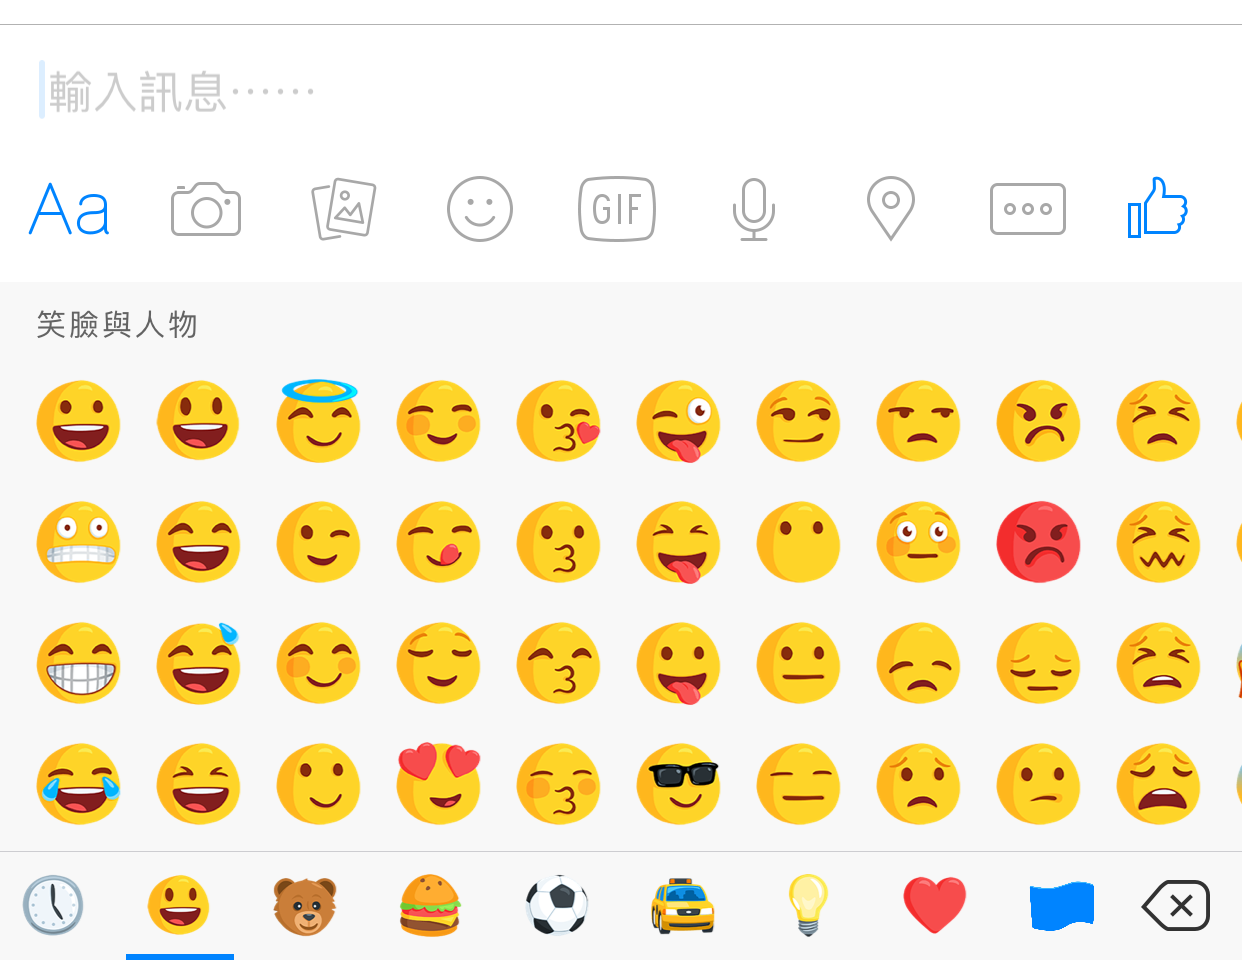 facebook-messenger-1500-new-emoji_01